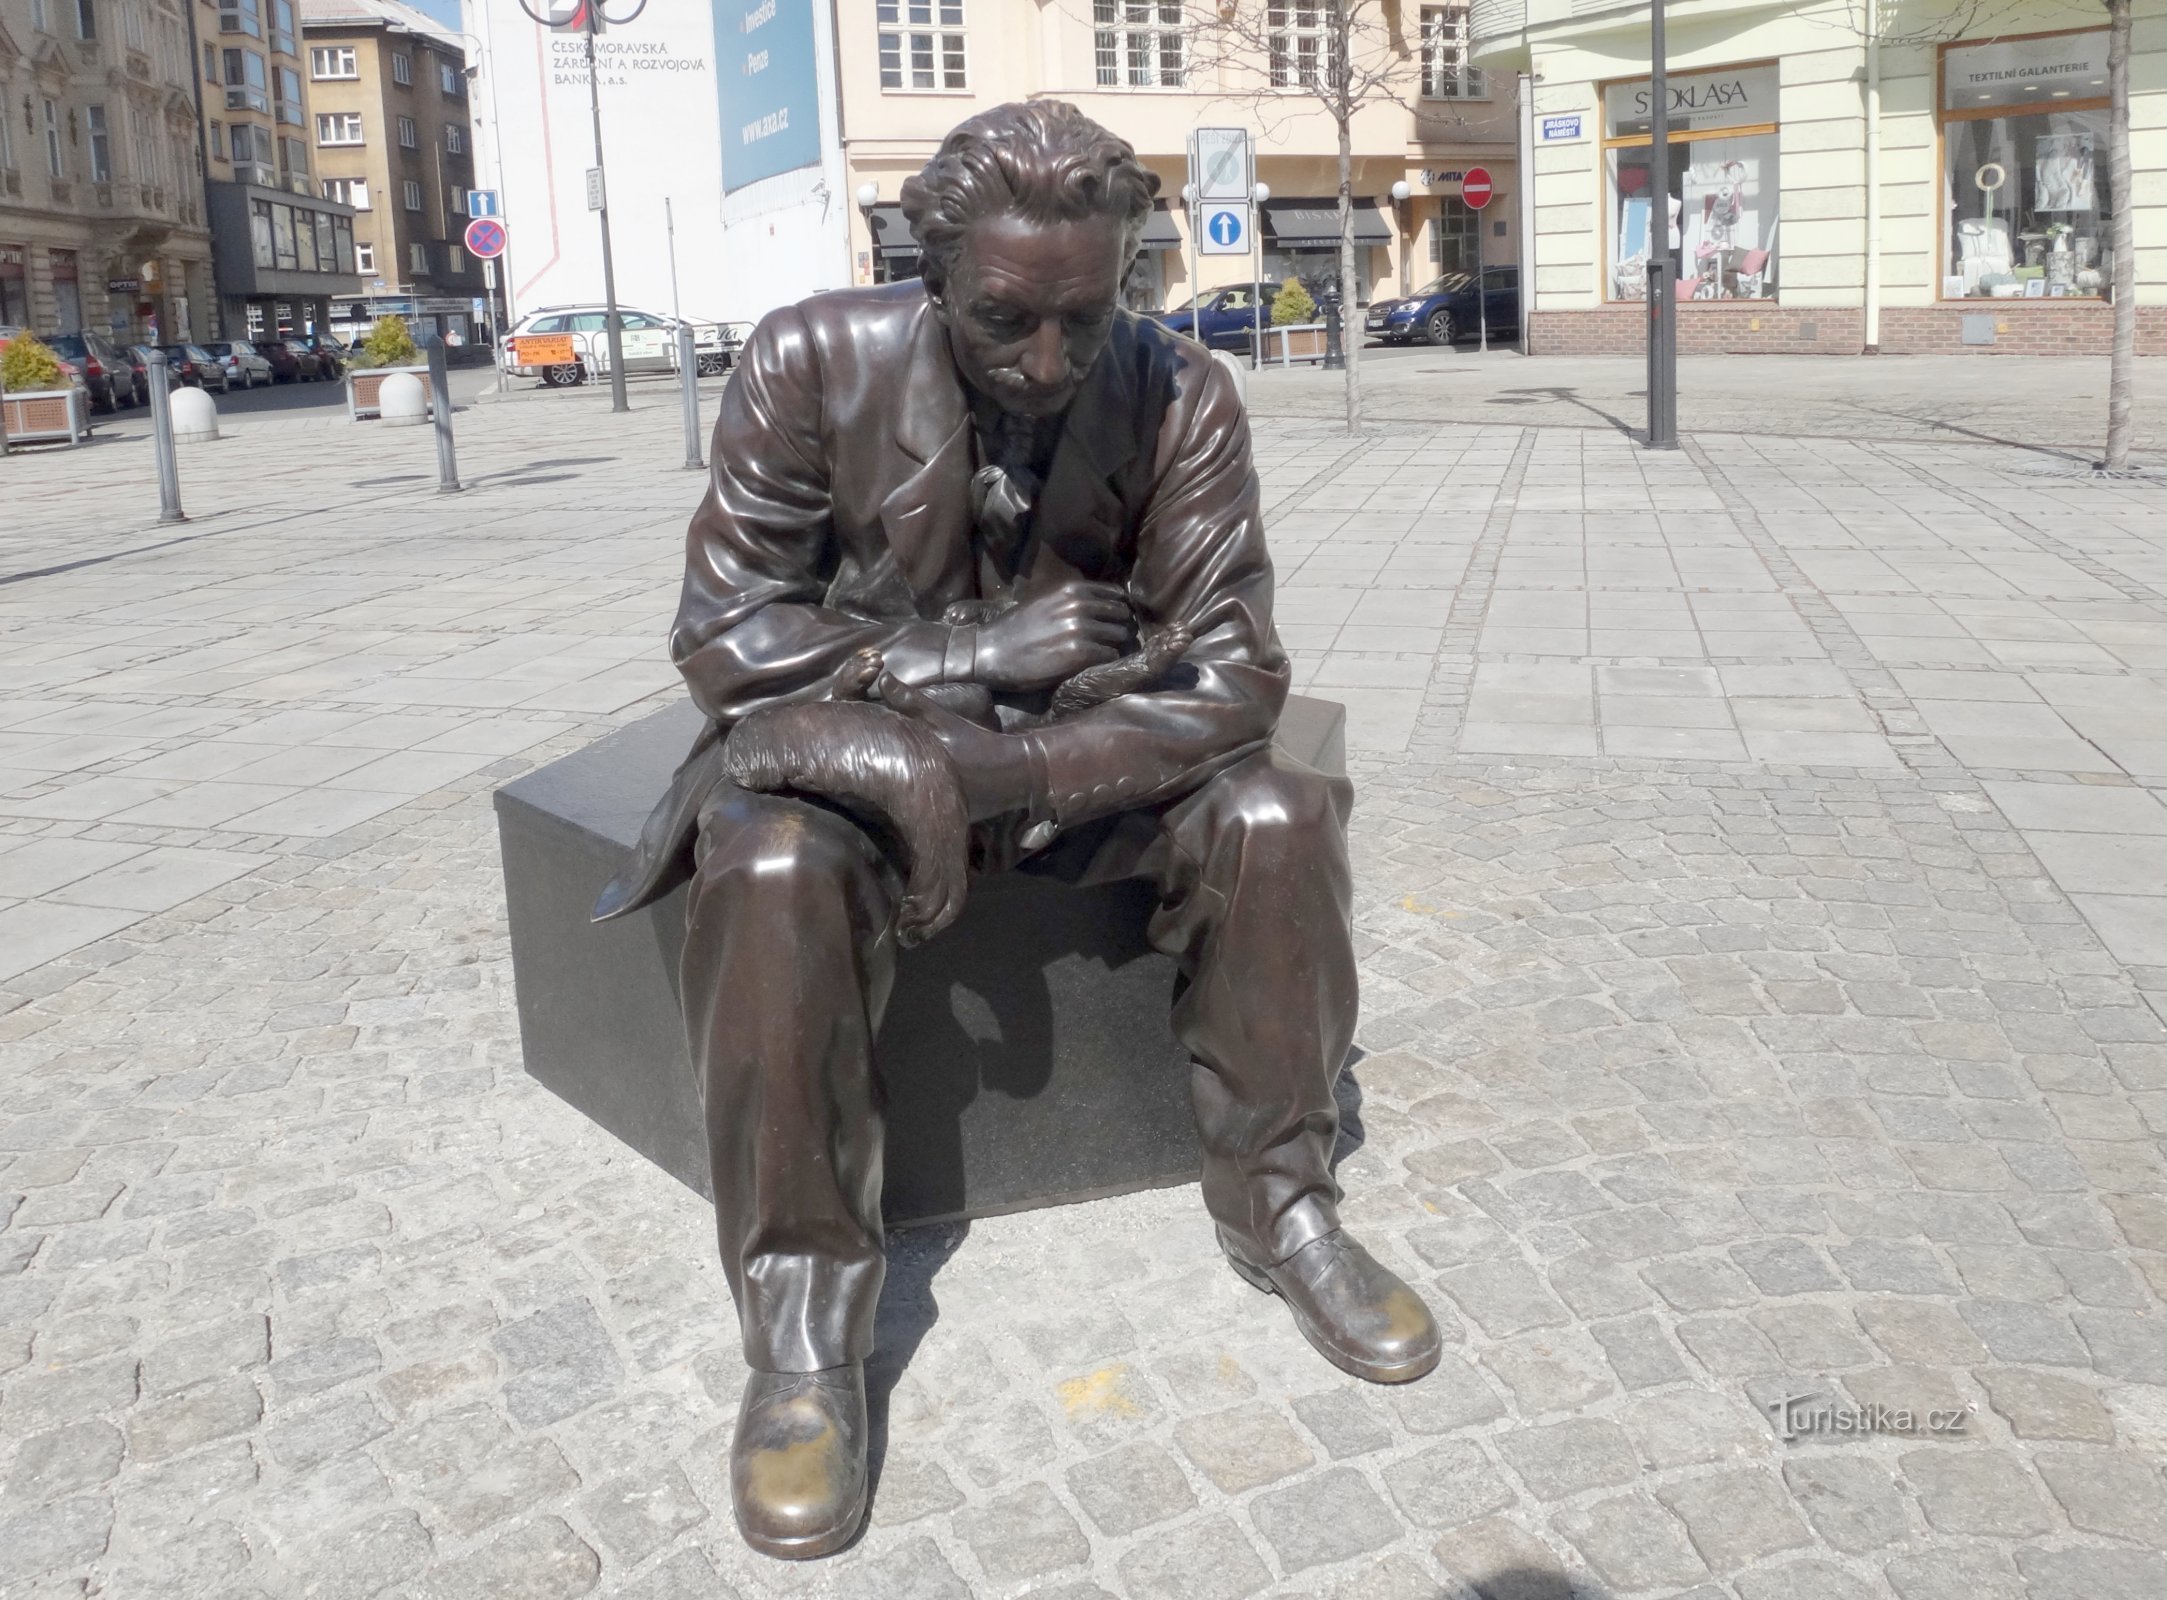 Ostrava - statue of Leoš Janáček